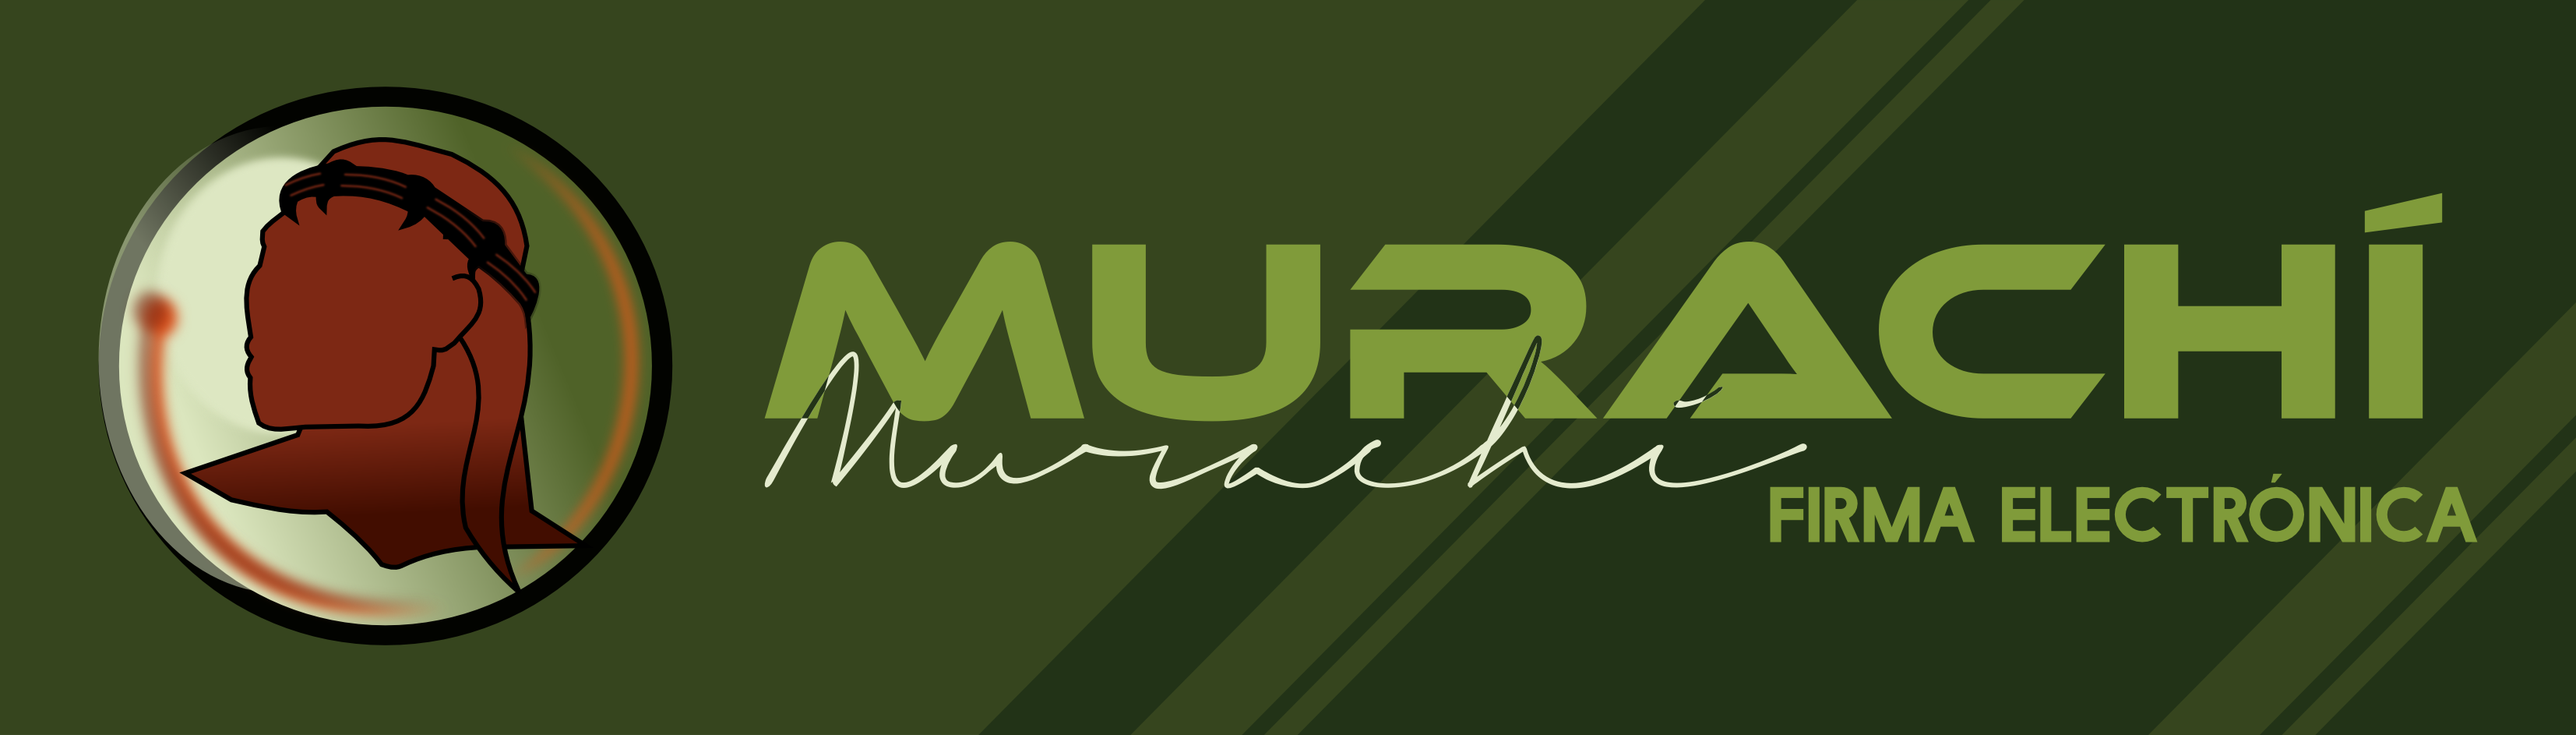 Logo del poryecto Murachi